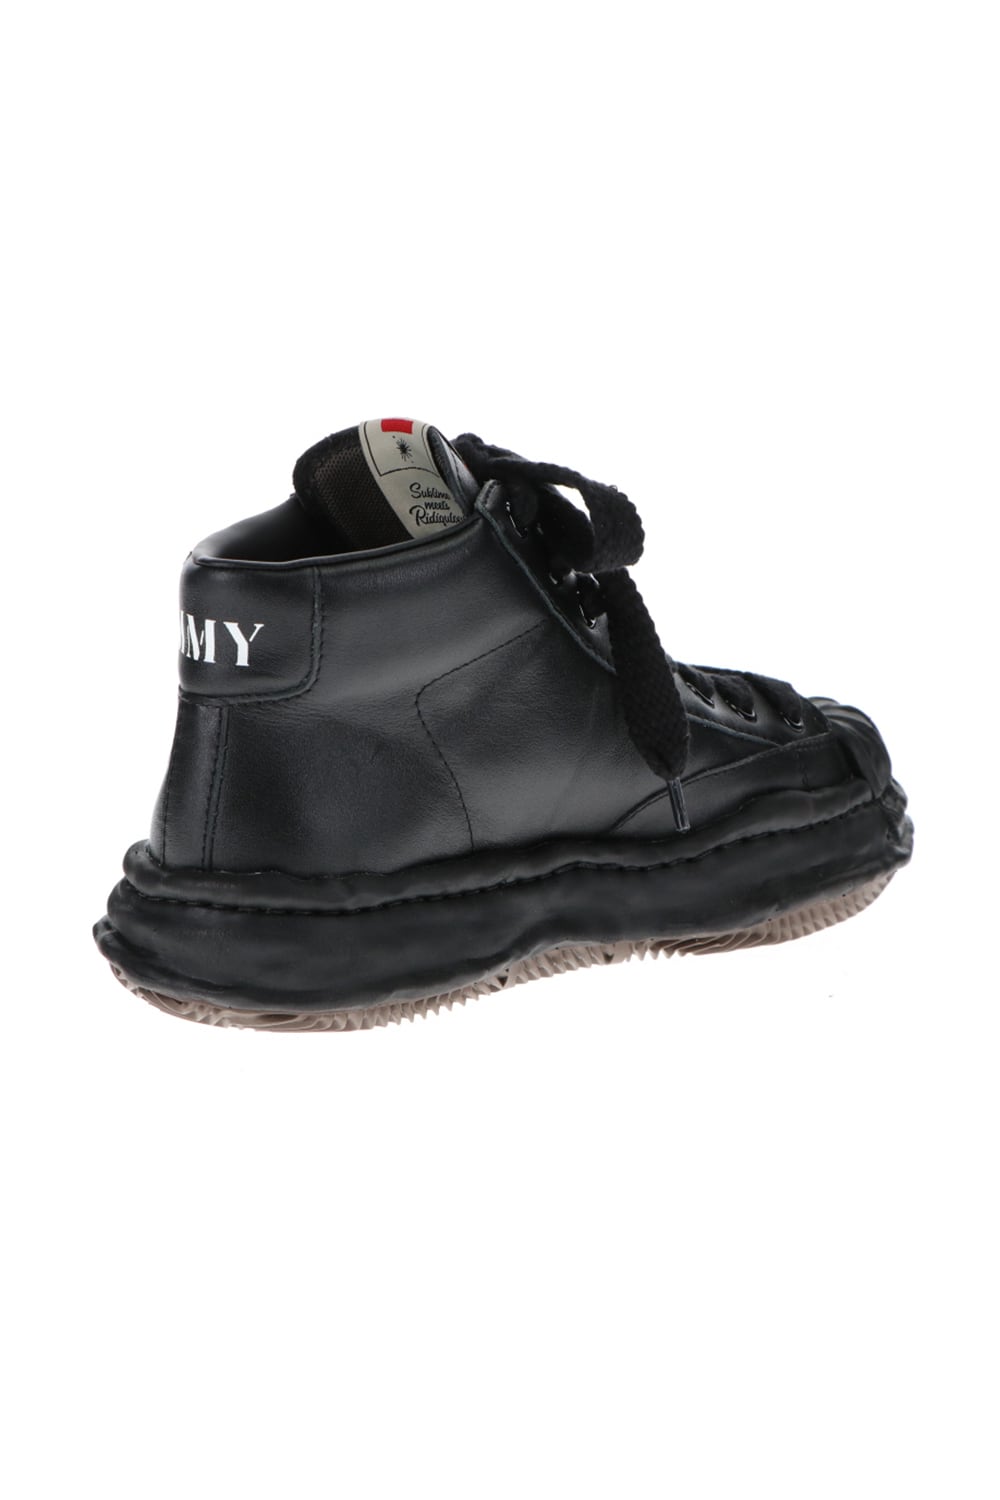 -BLAKEY High- Original STC sole leather Hi-top sneakers Black / Black